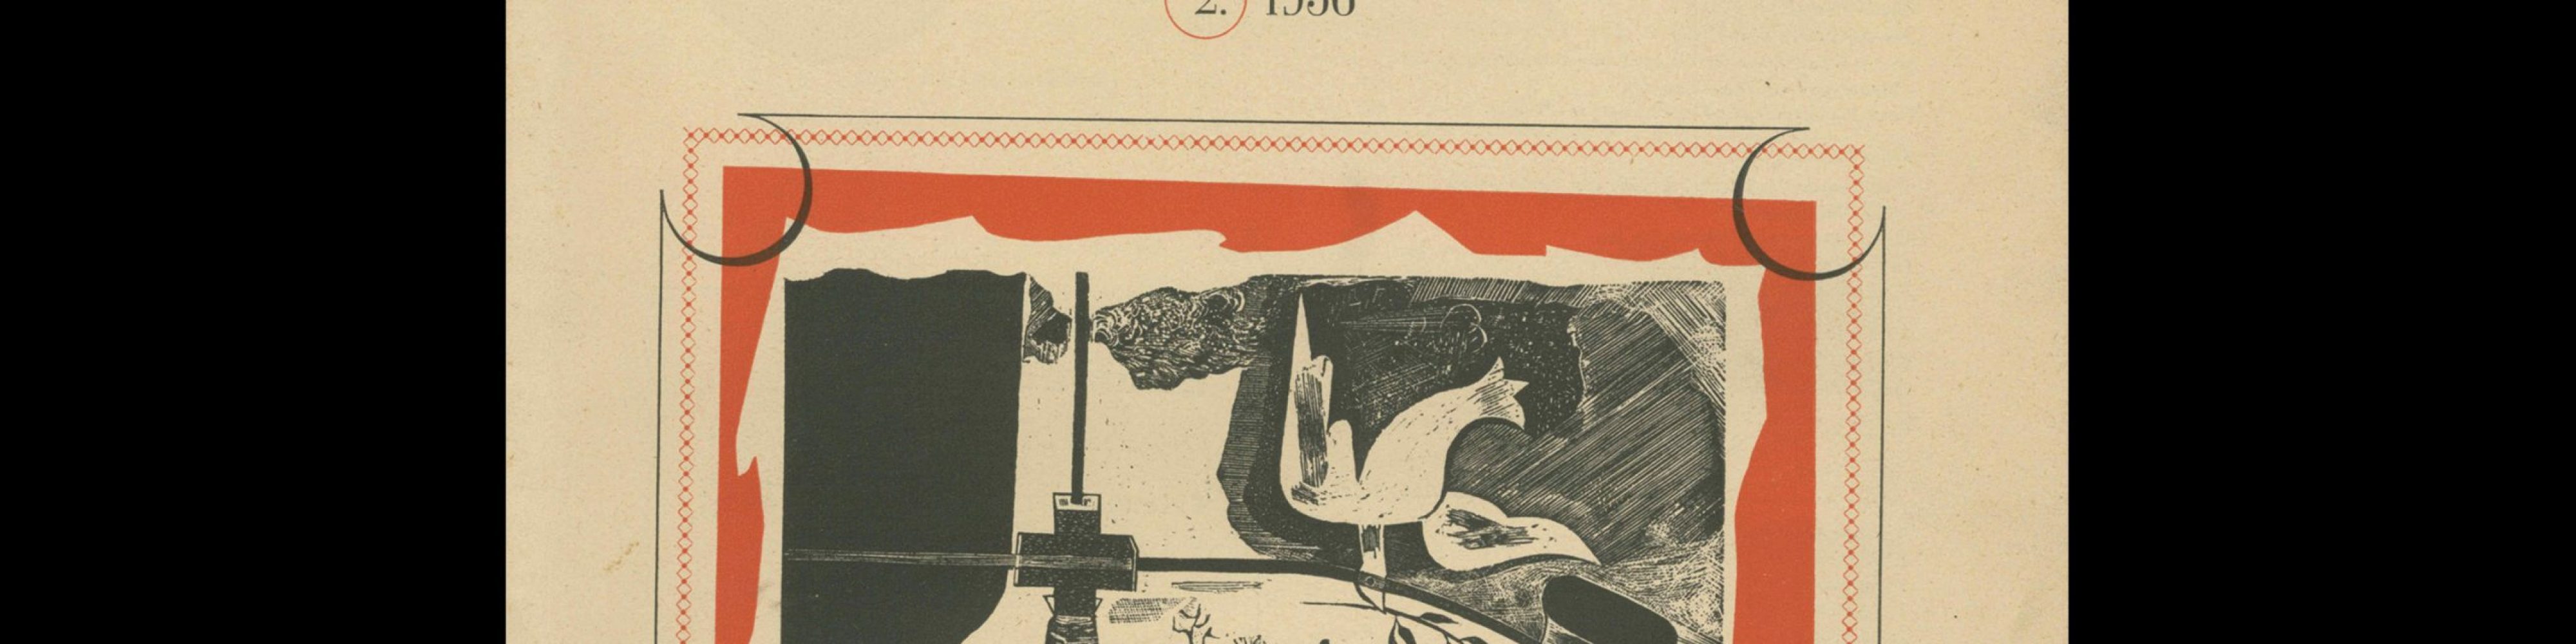 Typografische Monatsblätter, 2, 1936